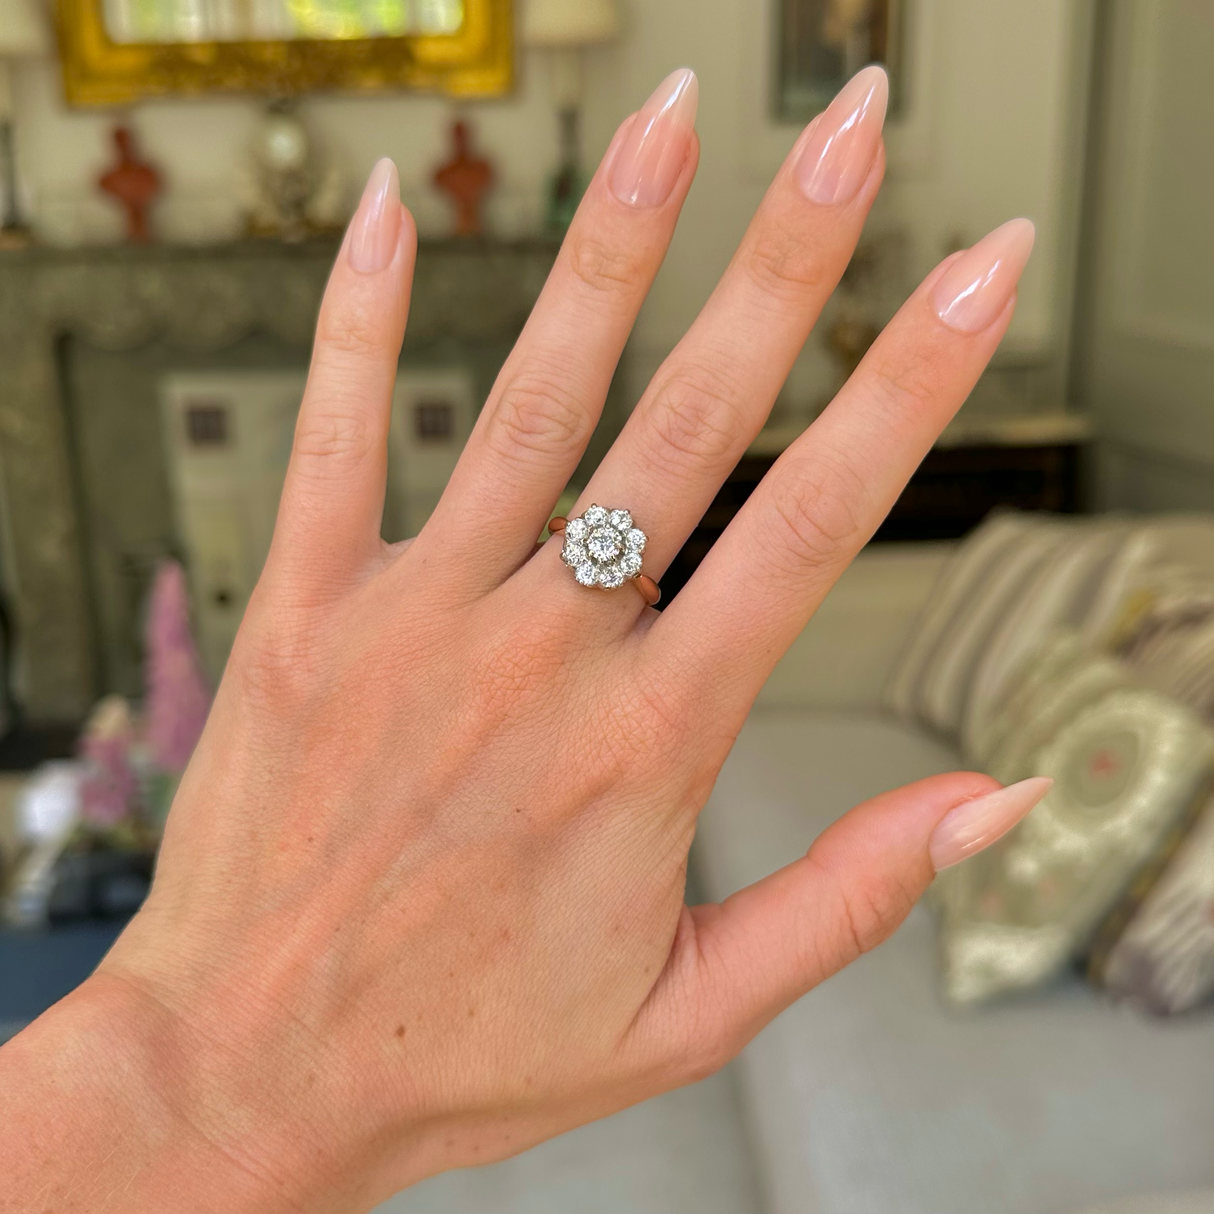 SOLD! Antique Belle Époque diamond cluster engagement ring, 18ct rose gold